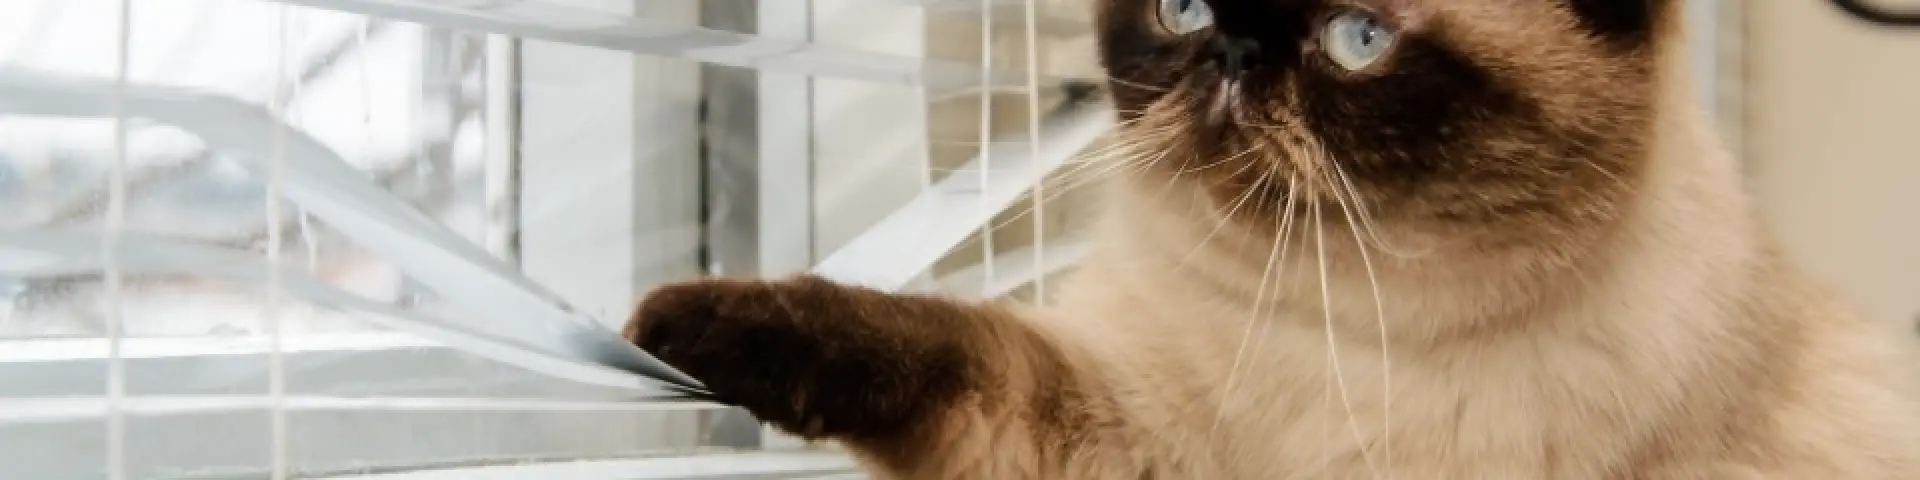 cat looking through window blinds